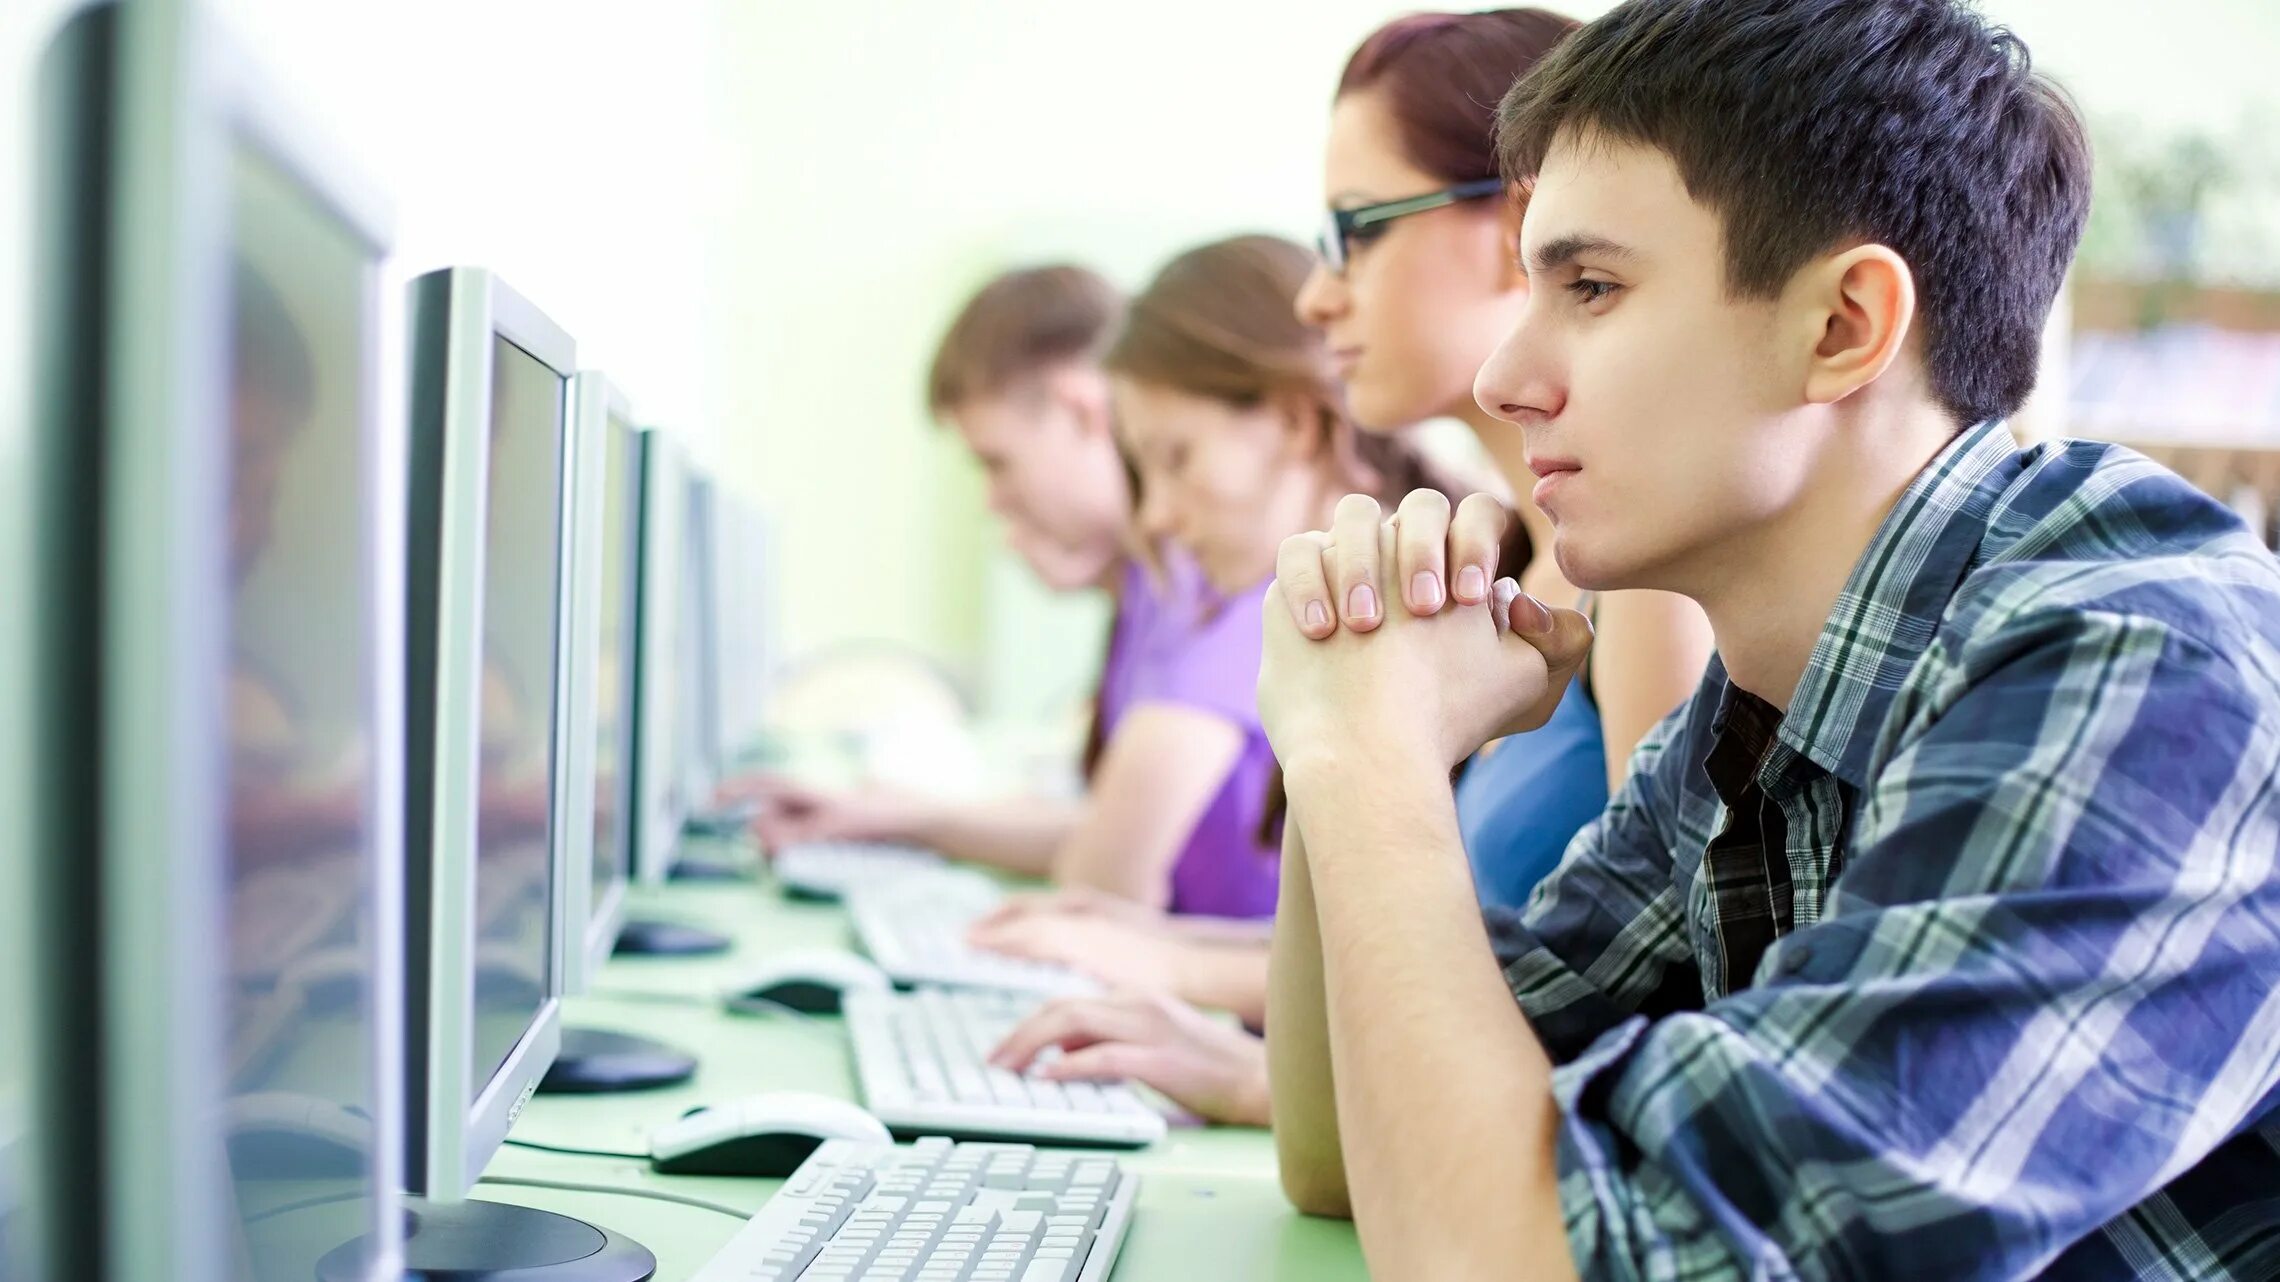 Обучаюсь на втором курсе. Подросток за компьютером. Подросток и компьютер. Ученик за компьютером. Школьники за компьютеро.